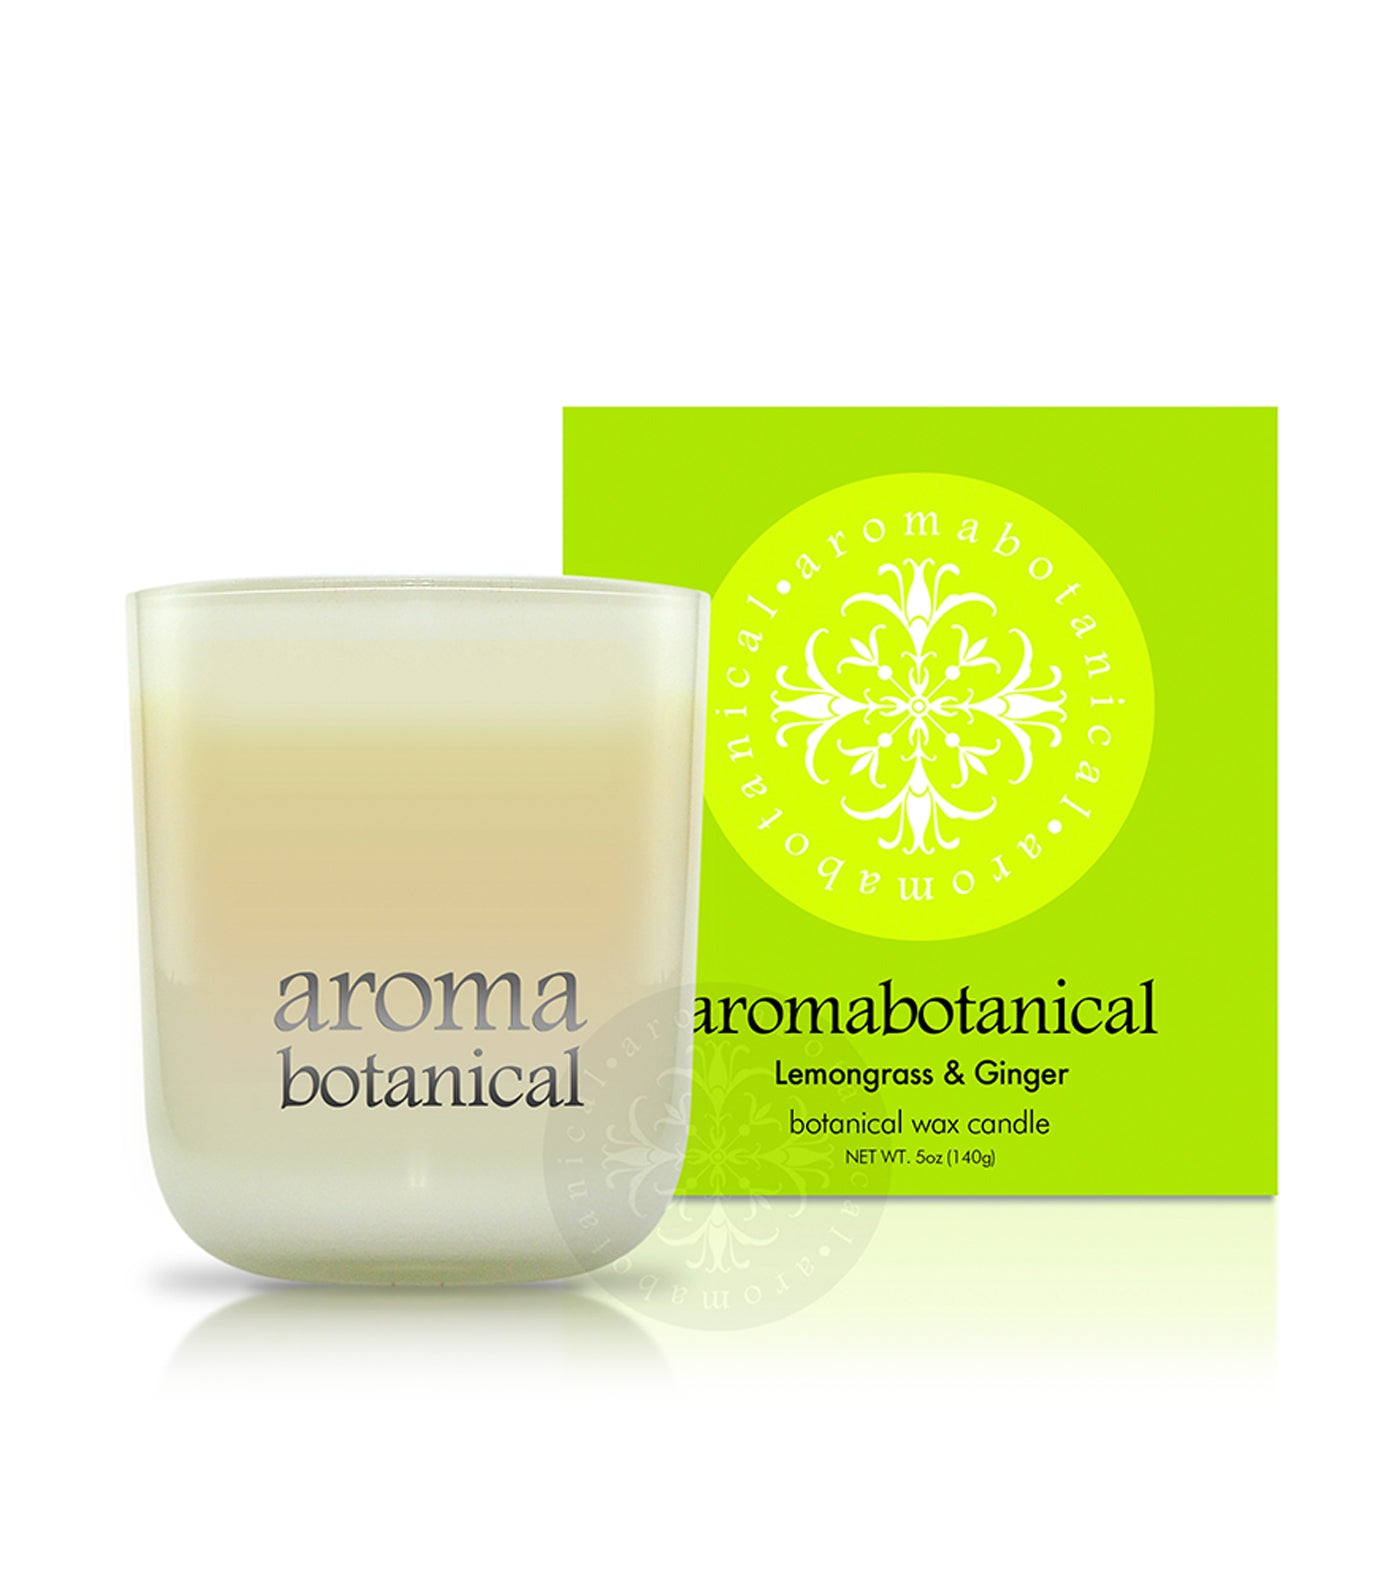 aromabotanical lemongrass & ginger 140g candle